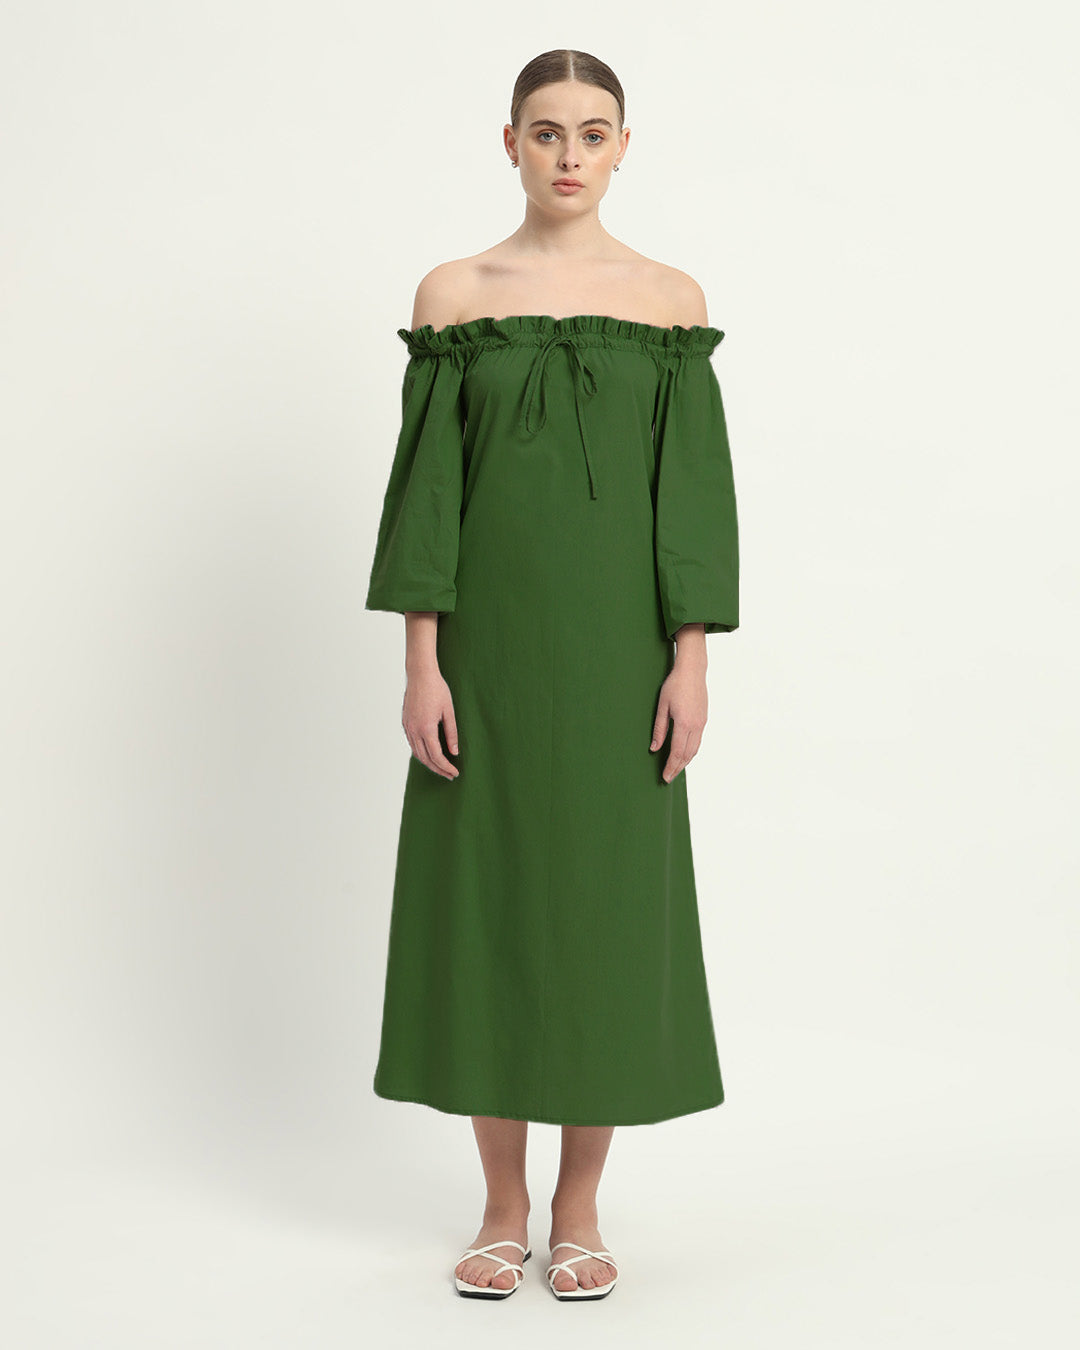 The Emerald Carlisle Cotton Dress